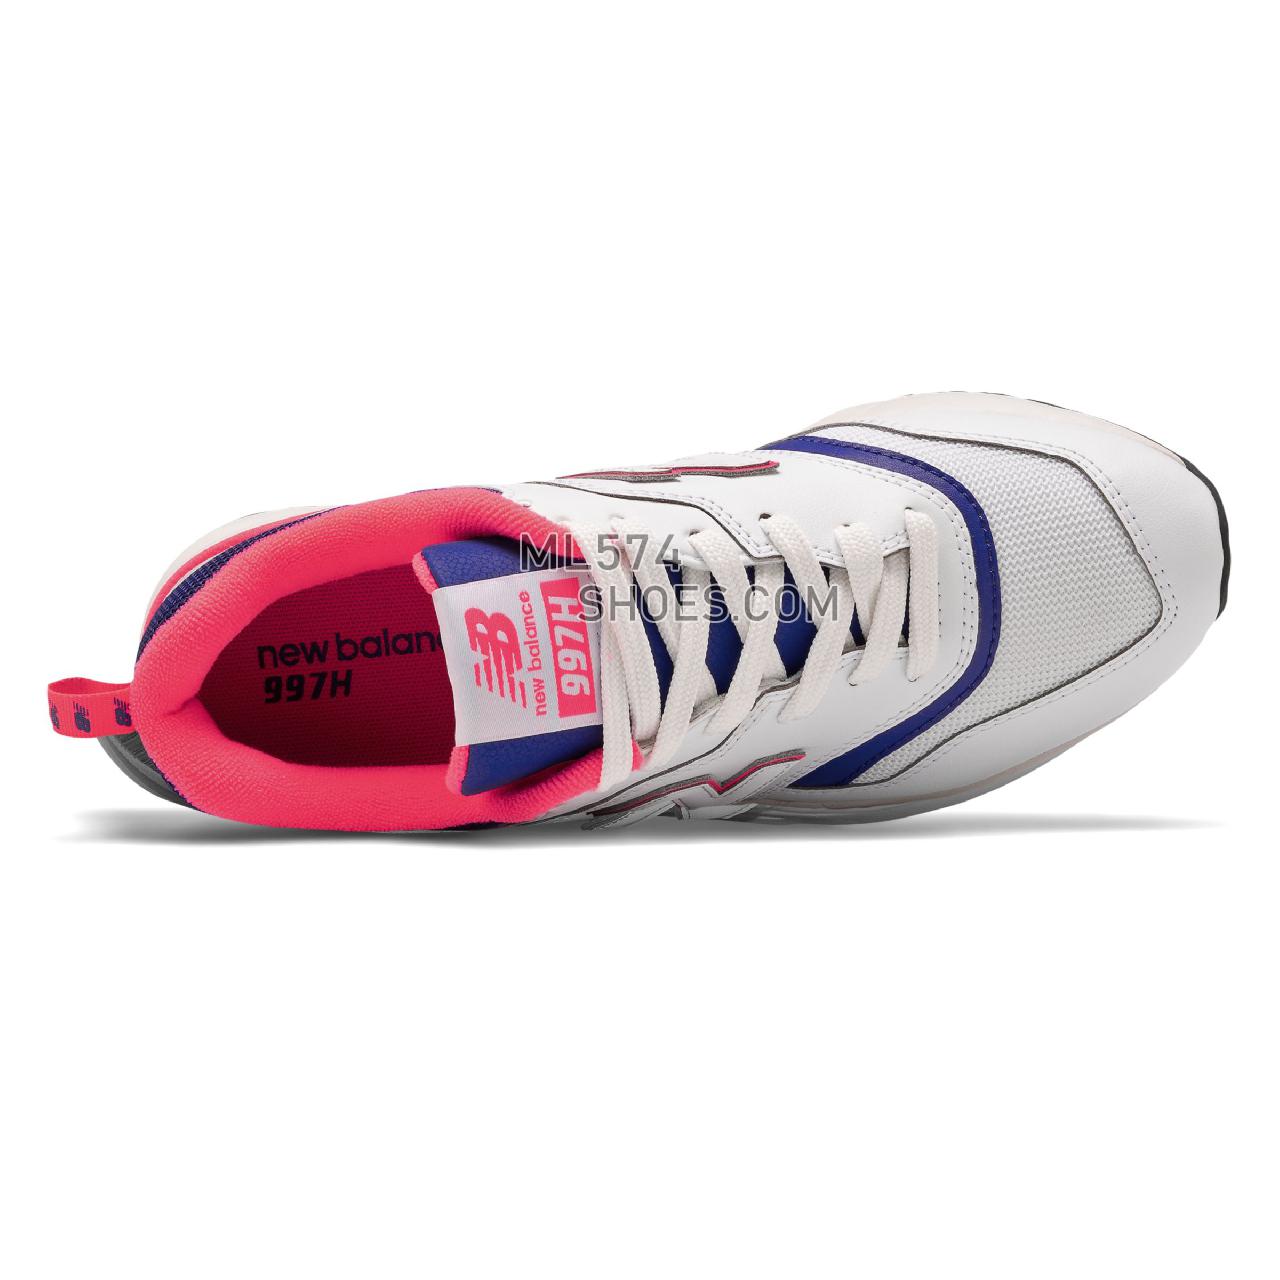 New Balance 997H - Men's Classic Sneakers - White with Laser Blue - CM997HAJ